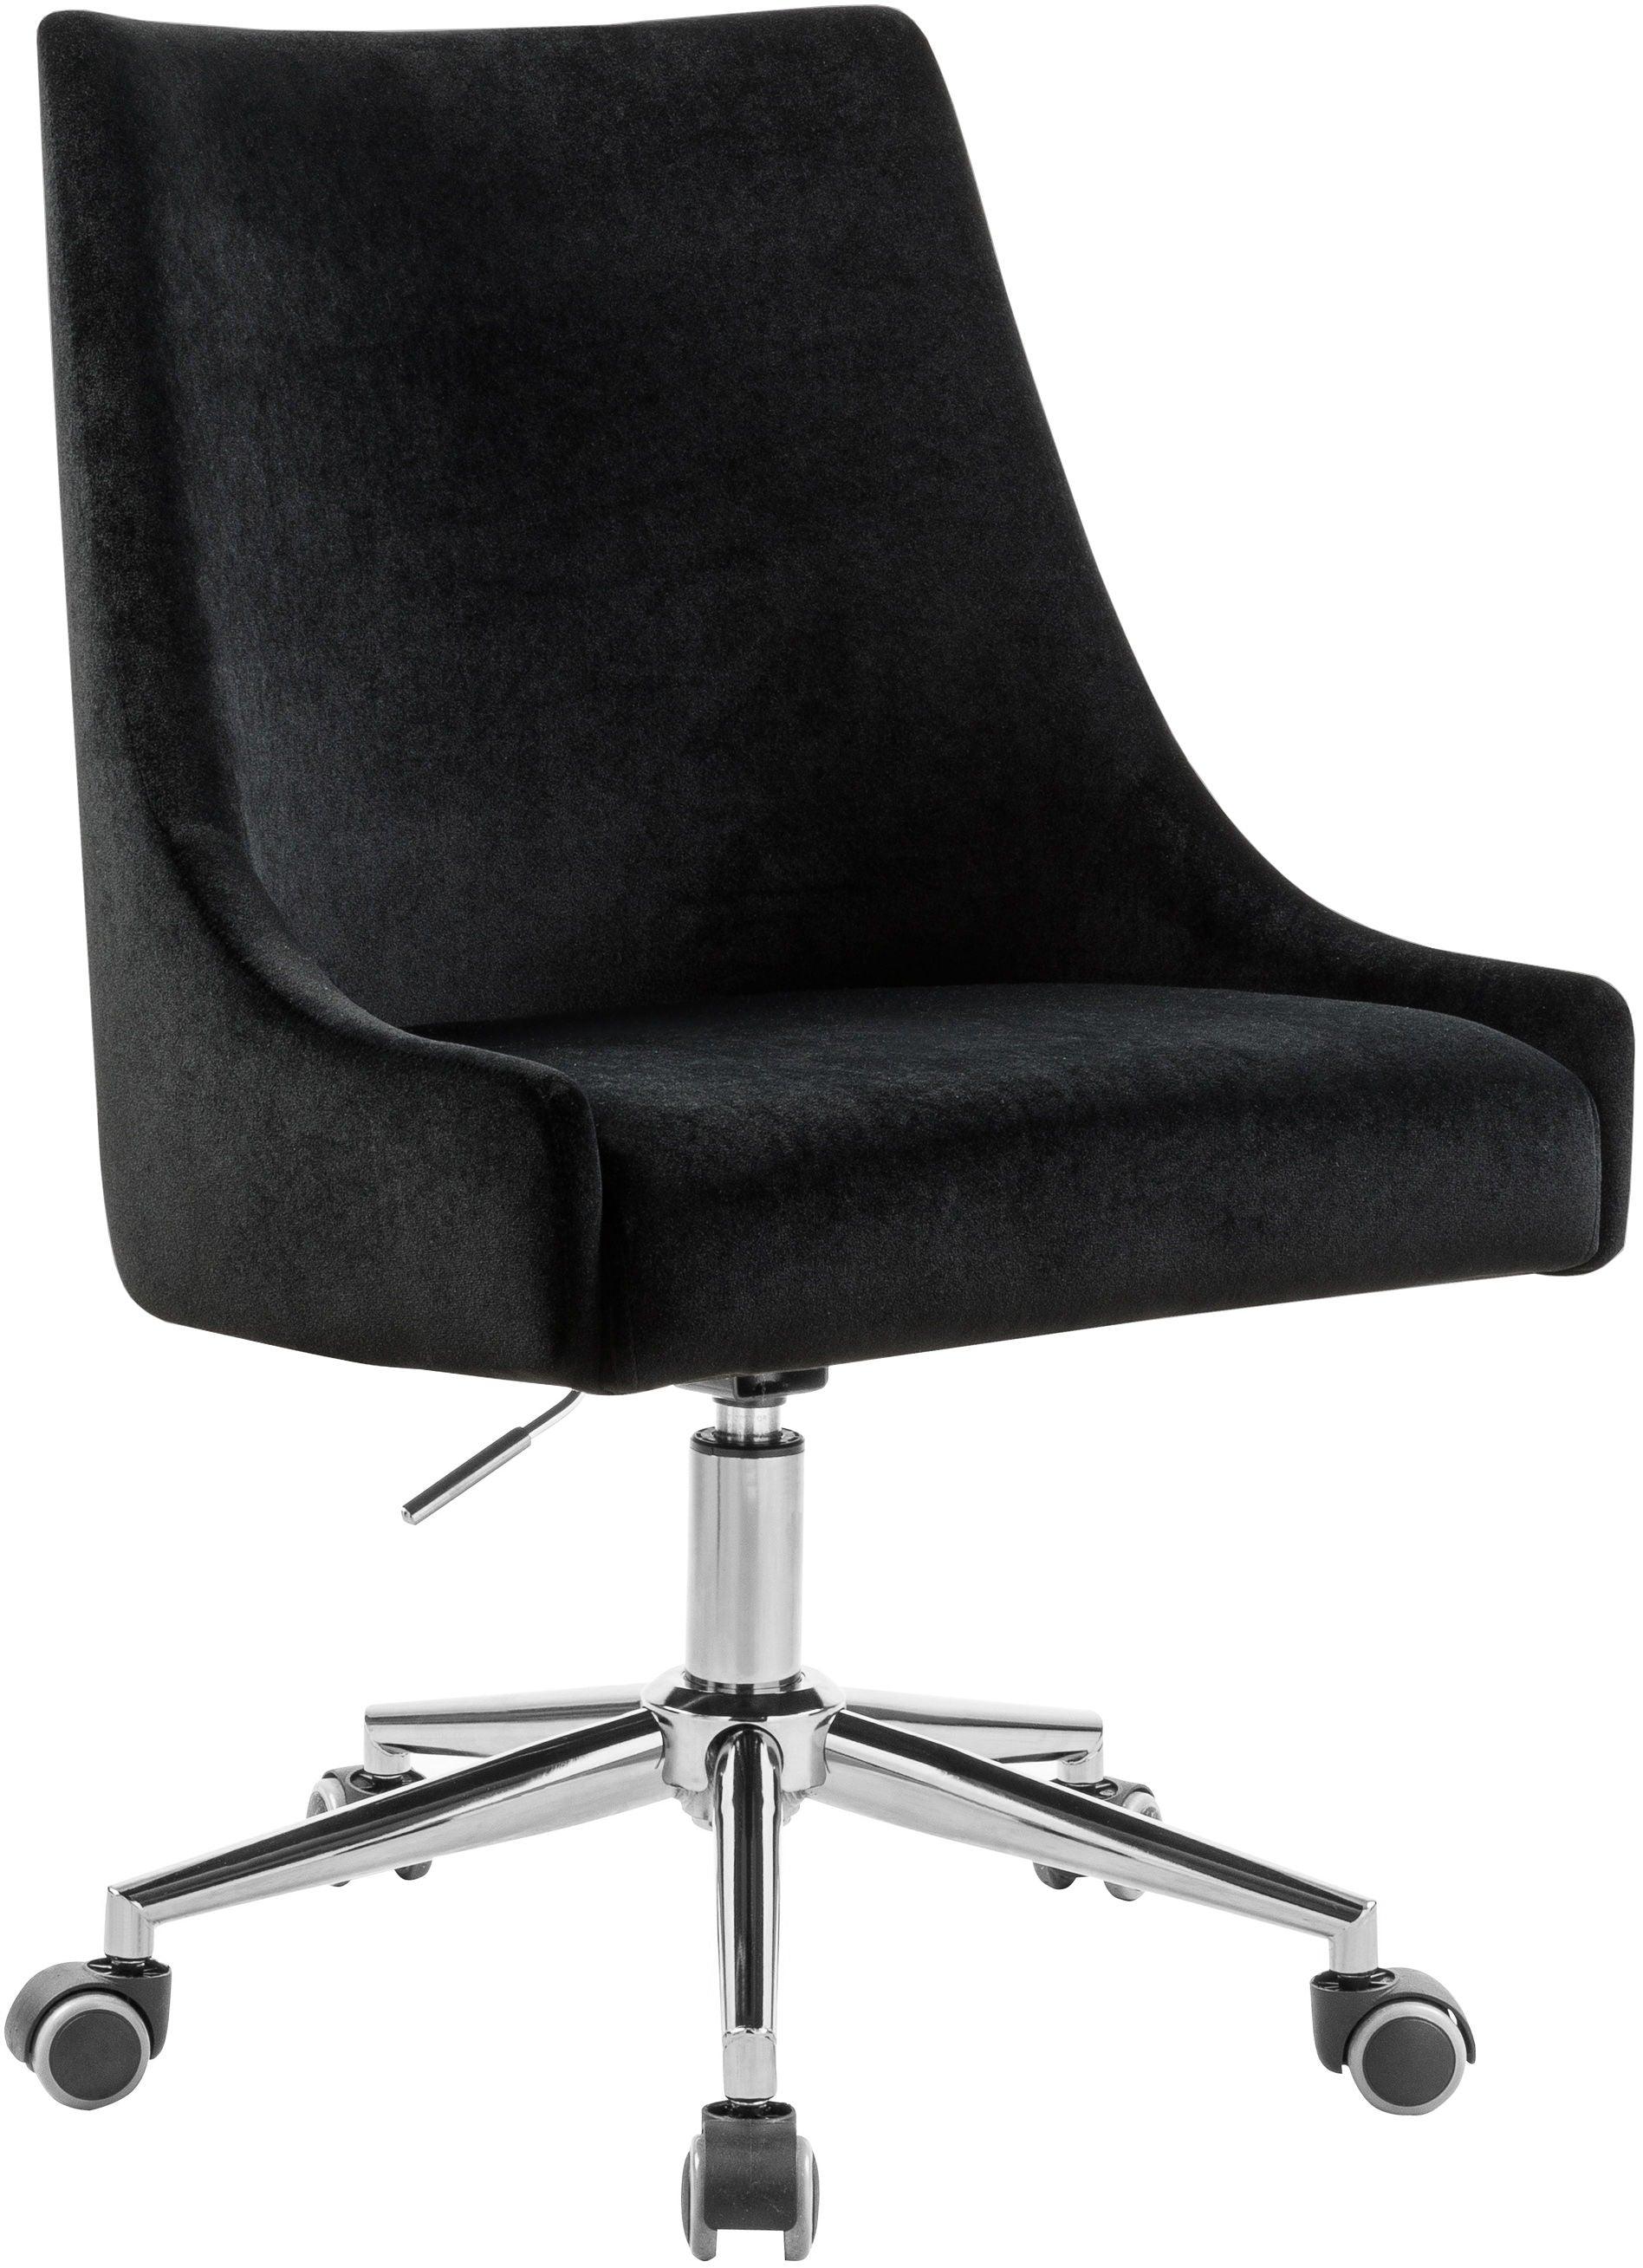 Meridian Furniture - Karina - Office Chair with Chrome Legs - 5th Avenue Furniture